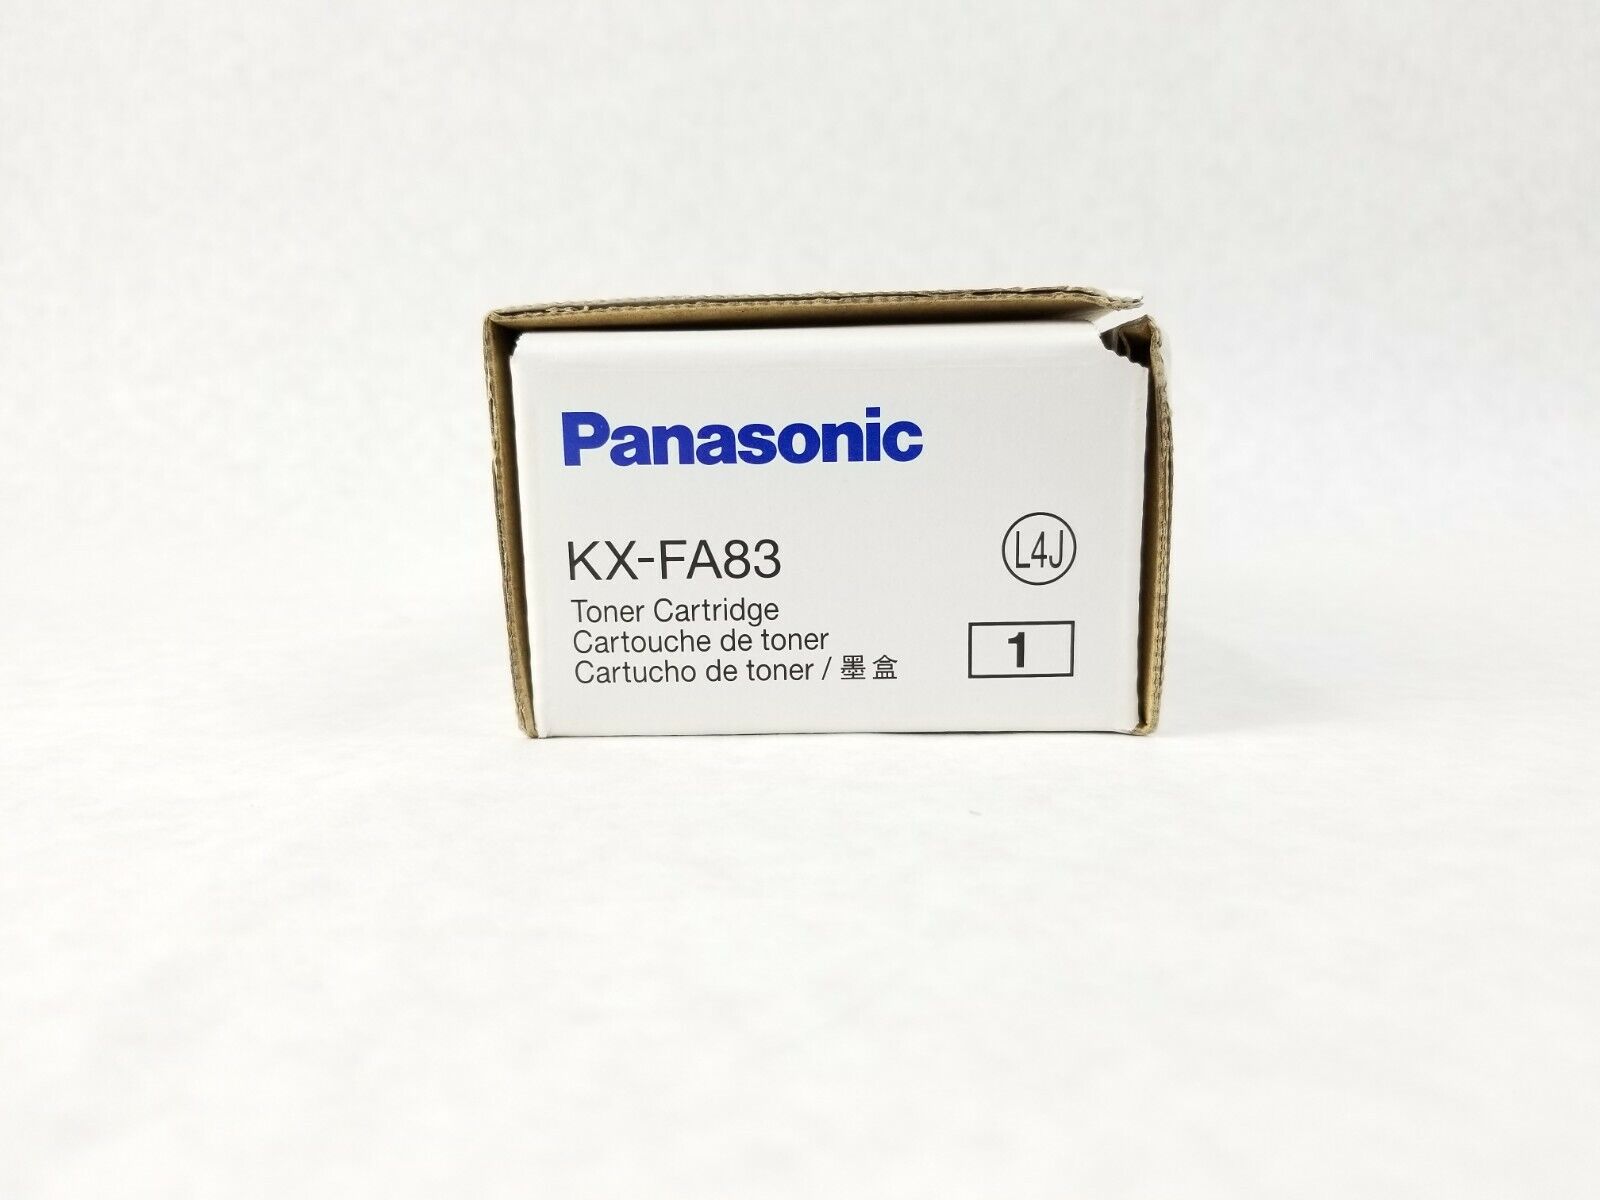 PANASONIC KX-FA83  - - TONER CARTRIDGE - 1 - KXFL511 / KXFL541